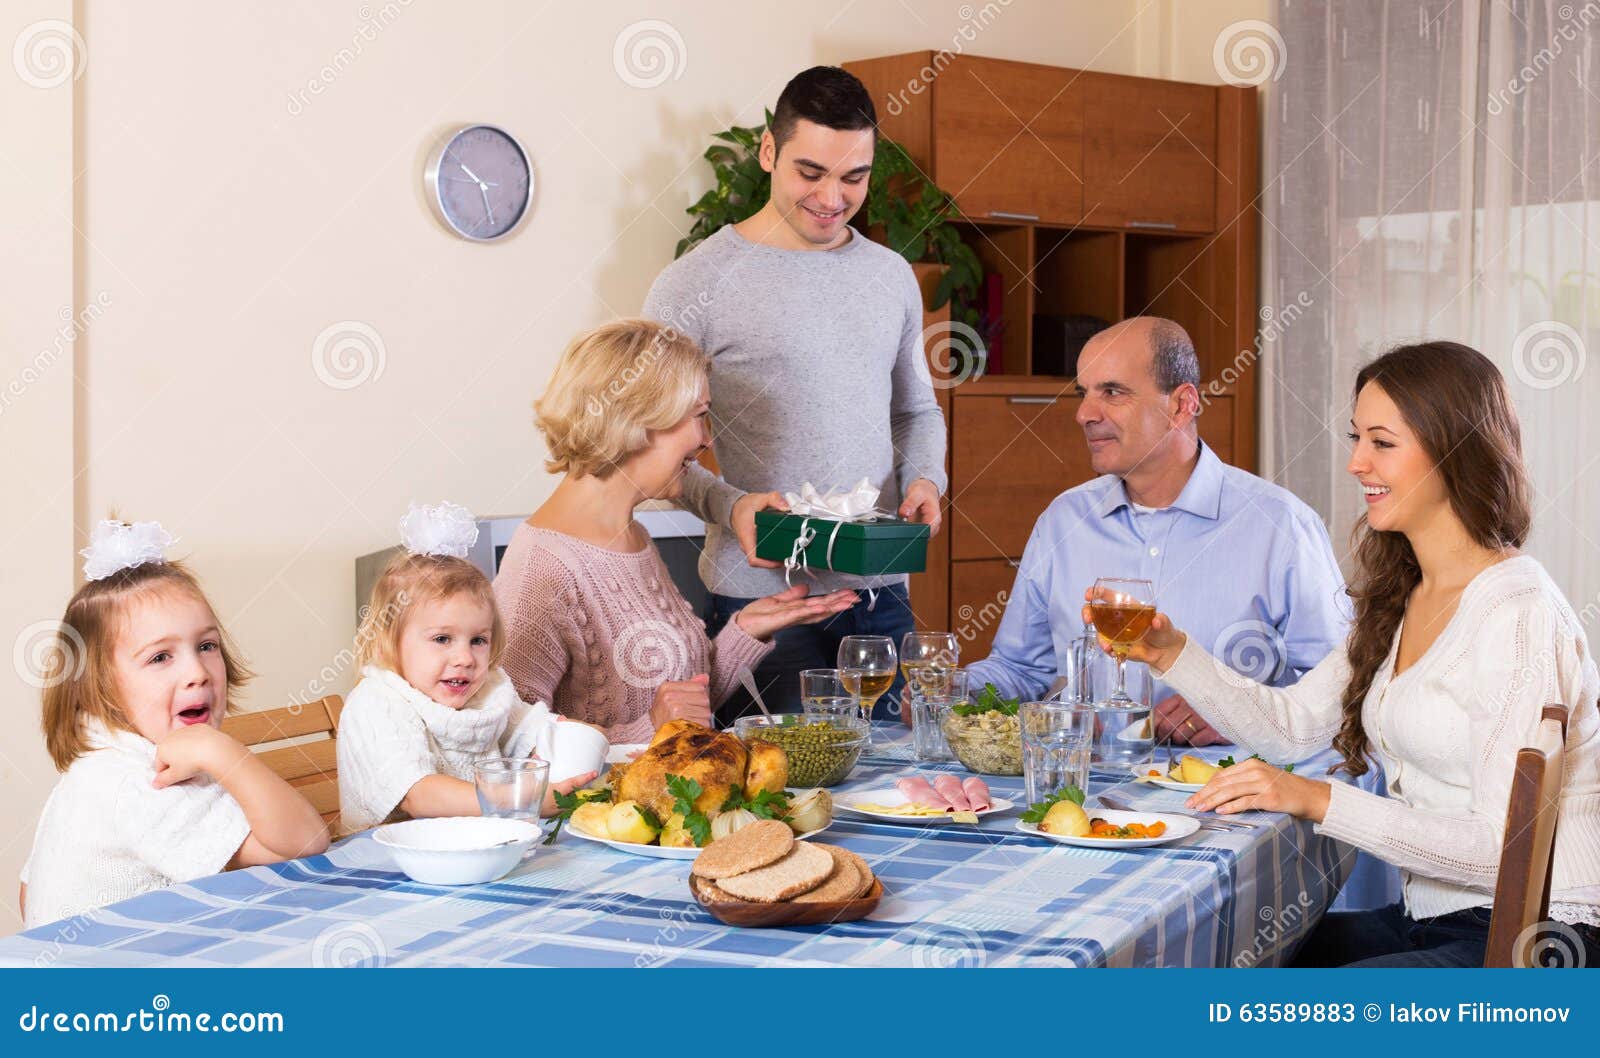 Big Family Celebrating Birthday at Festive Dinner Stock Image - Image